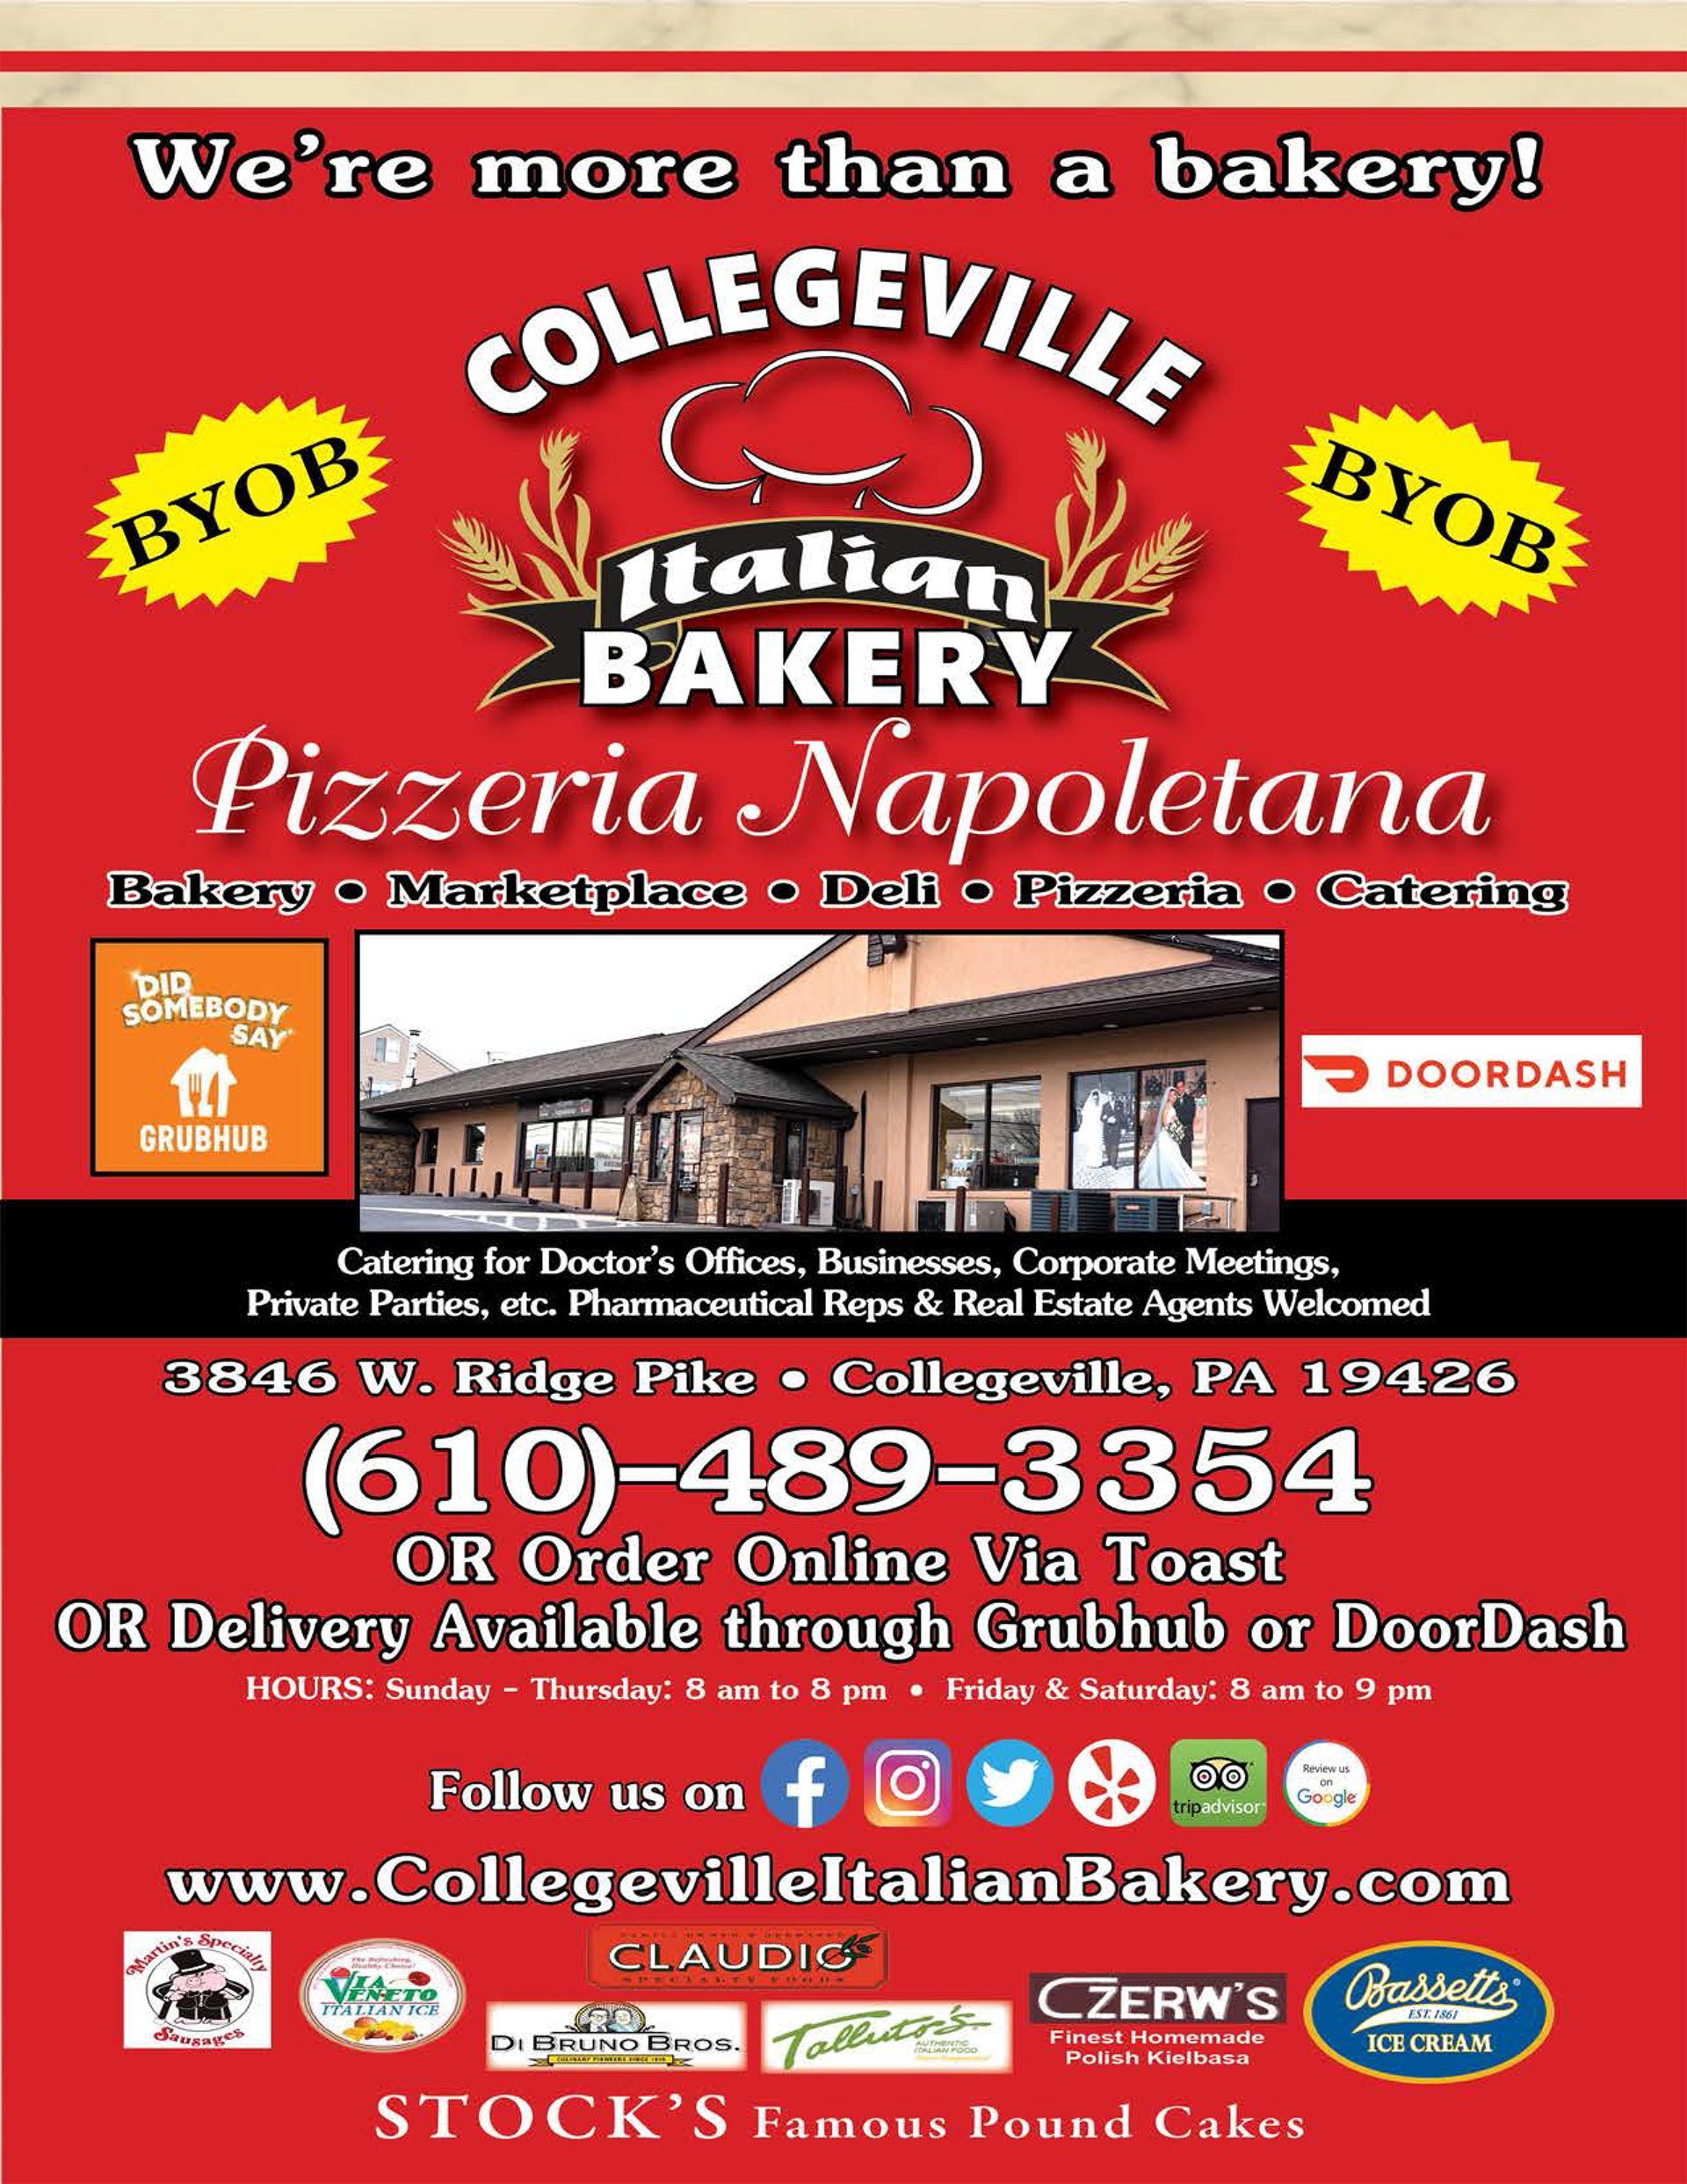 Collegeville Italian Bakery Pizzeria Napoletana Menu